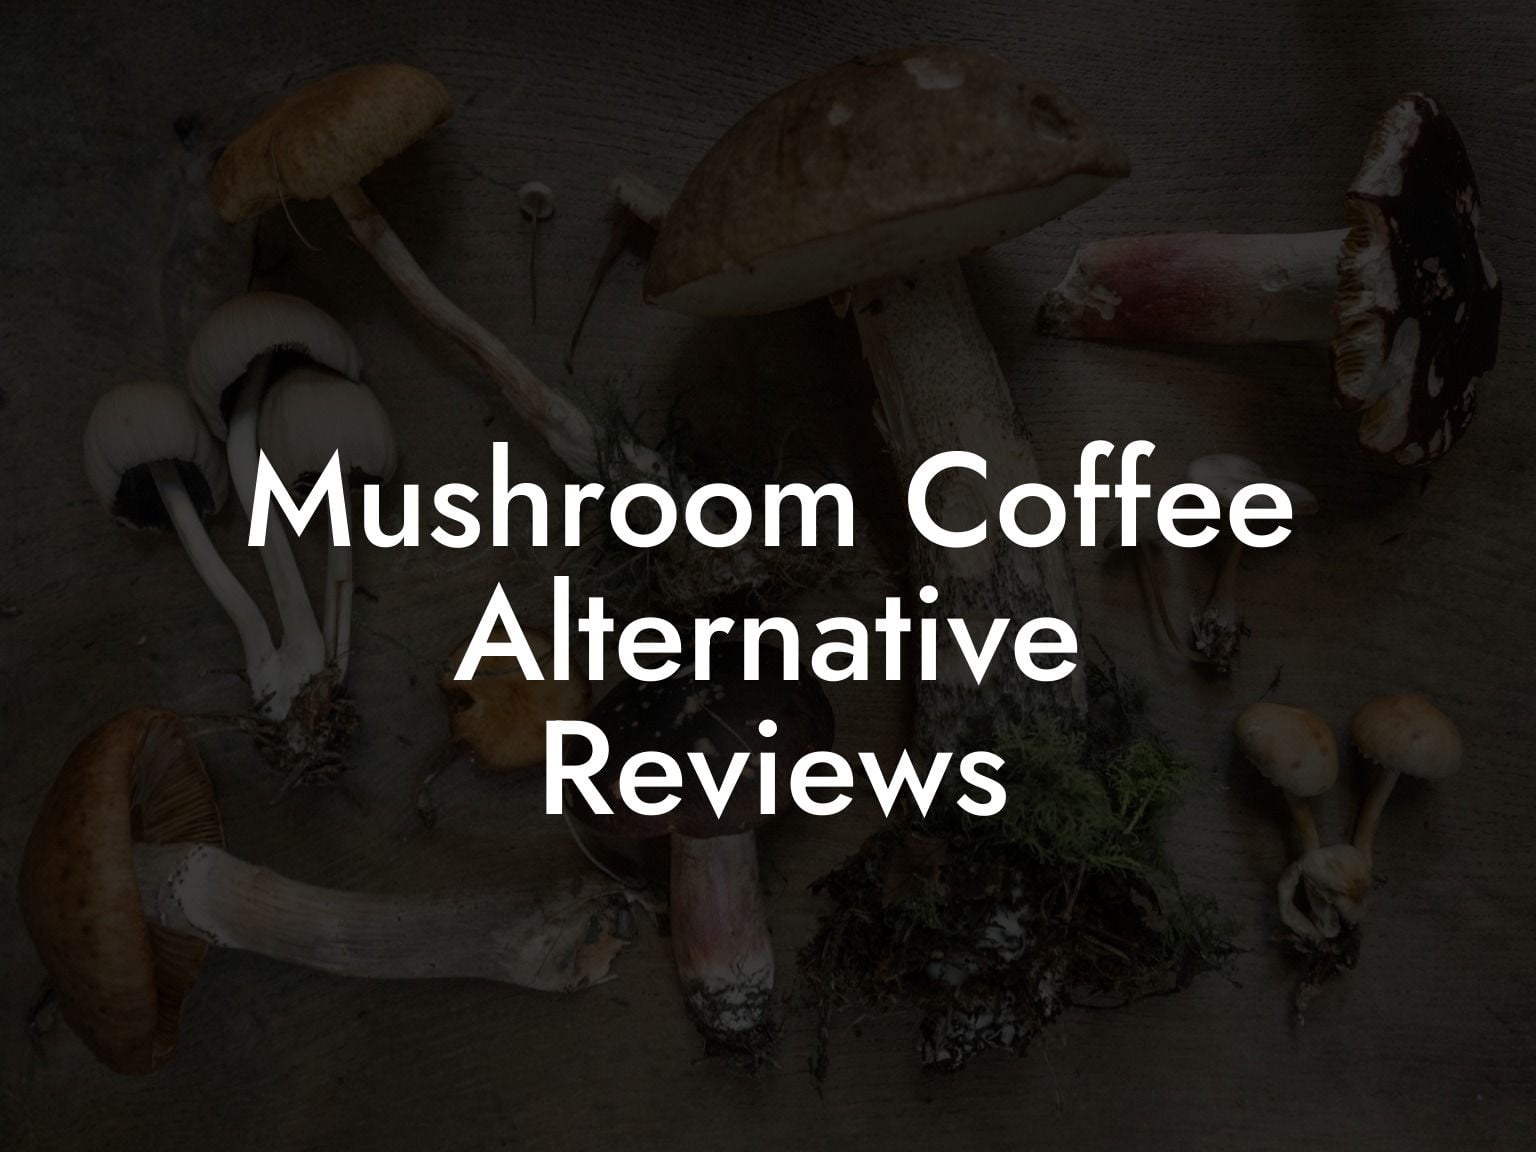 Mushroom Coffee Alternative Reviews